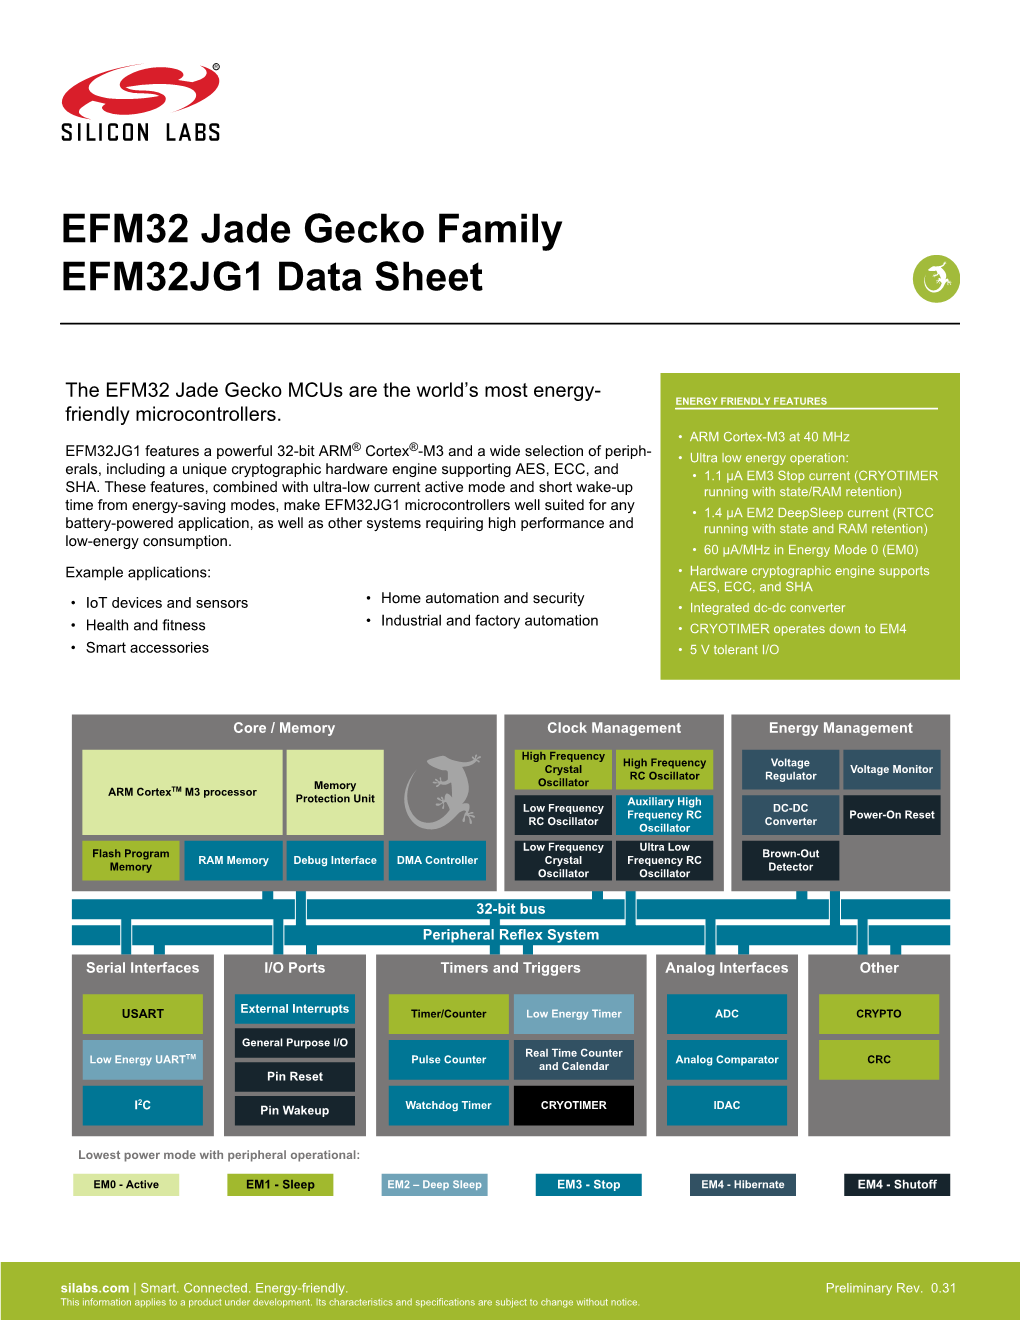 EFM32 Jade Gecko Family EFM32JG1 Data Sheet